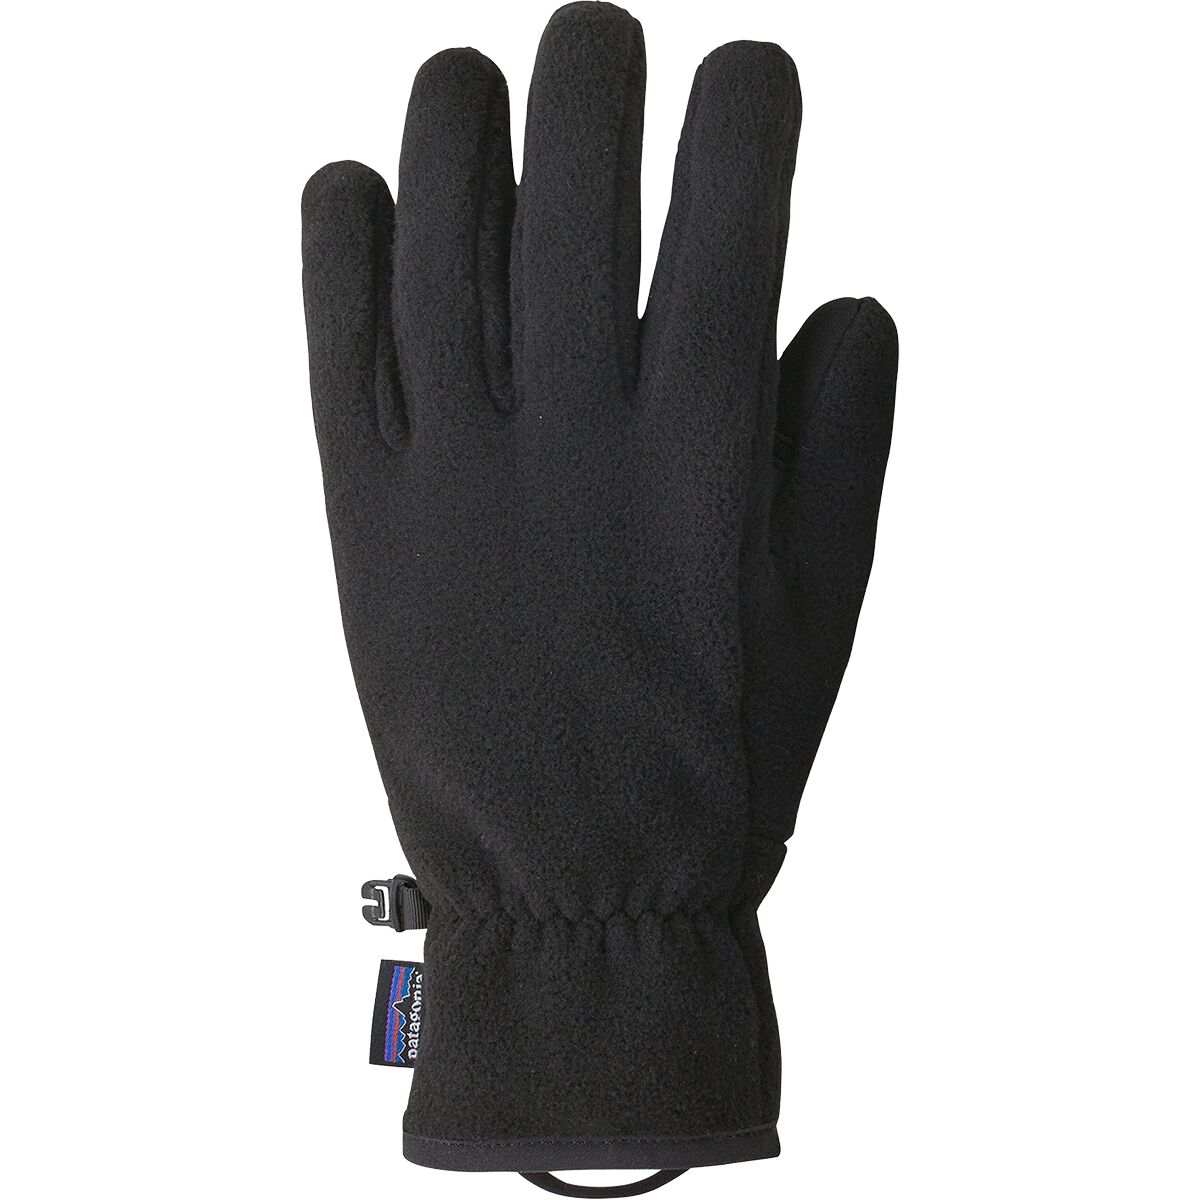 Patagonia Synchilla Glove - Men's